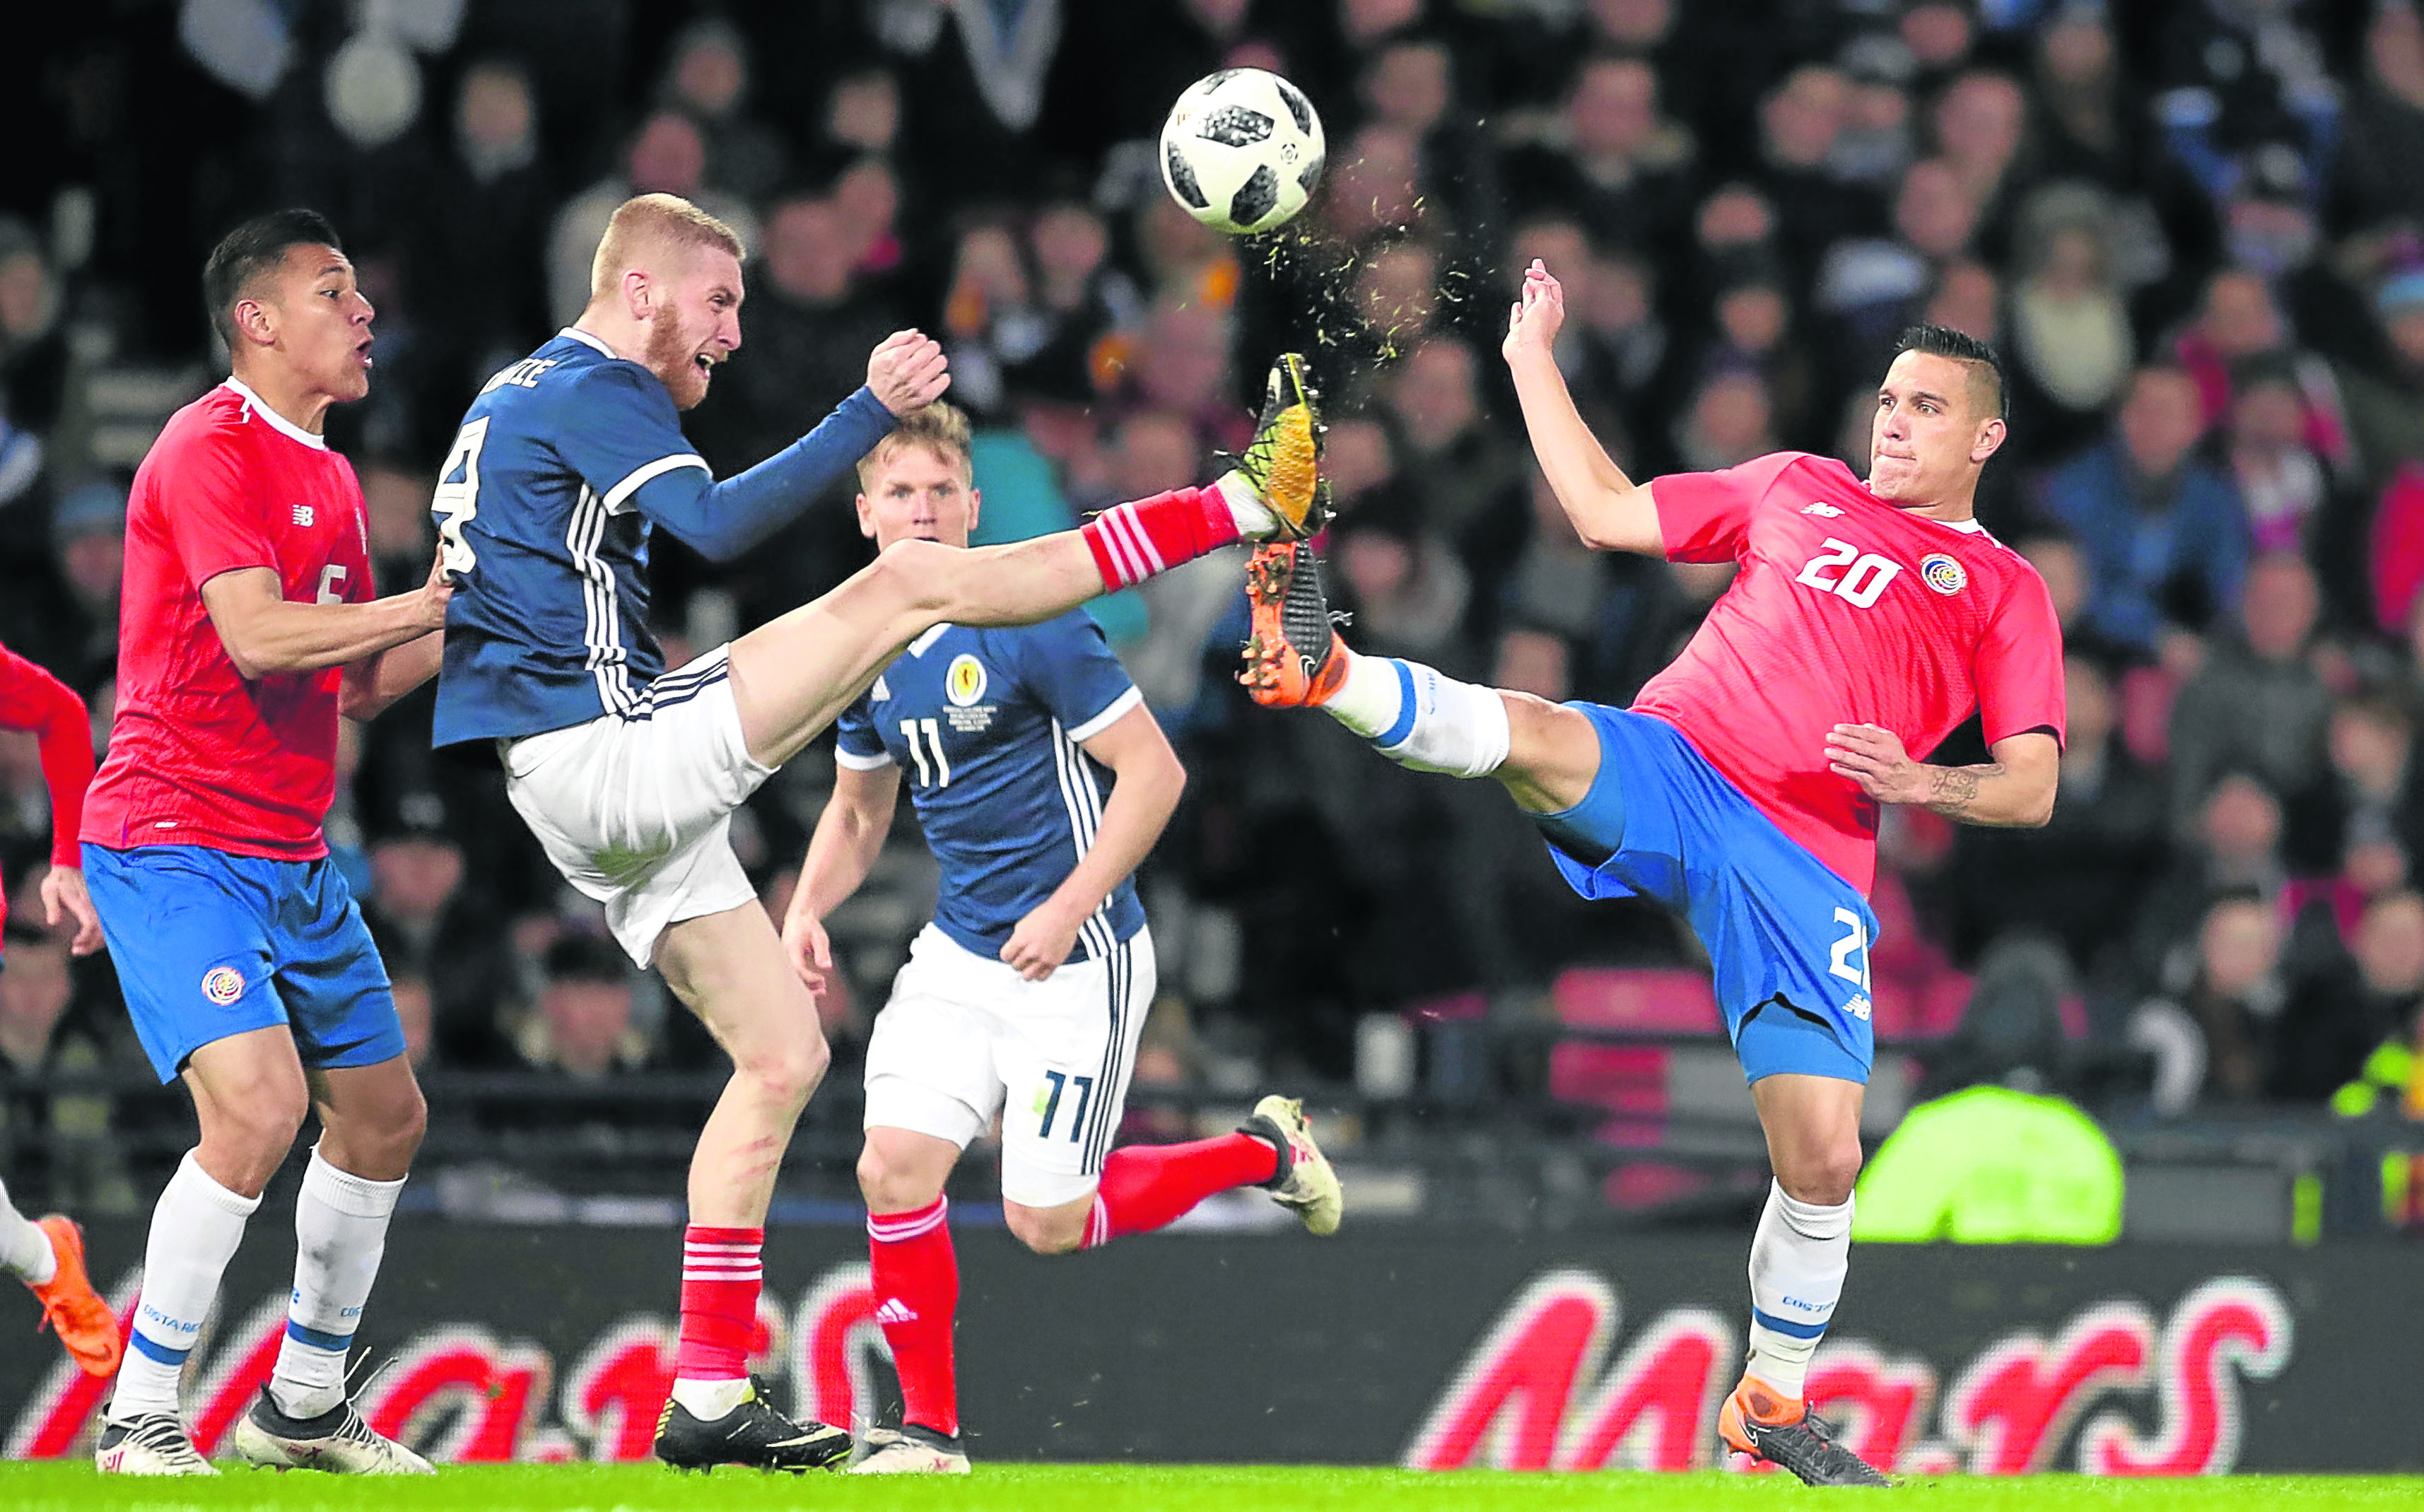 Scotland's Oliver McBurnie (left) and Costa Rica's David Guzman battle for the ball during the international friendly match at Hampden Park, Glasgow.